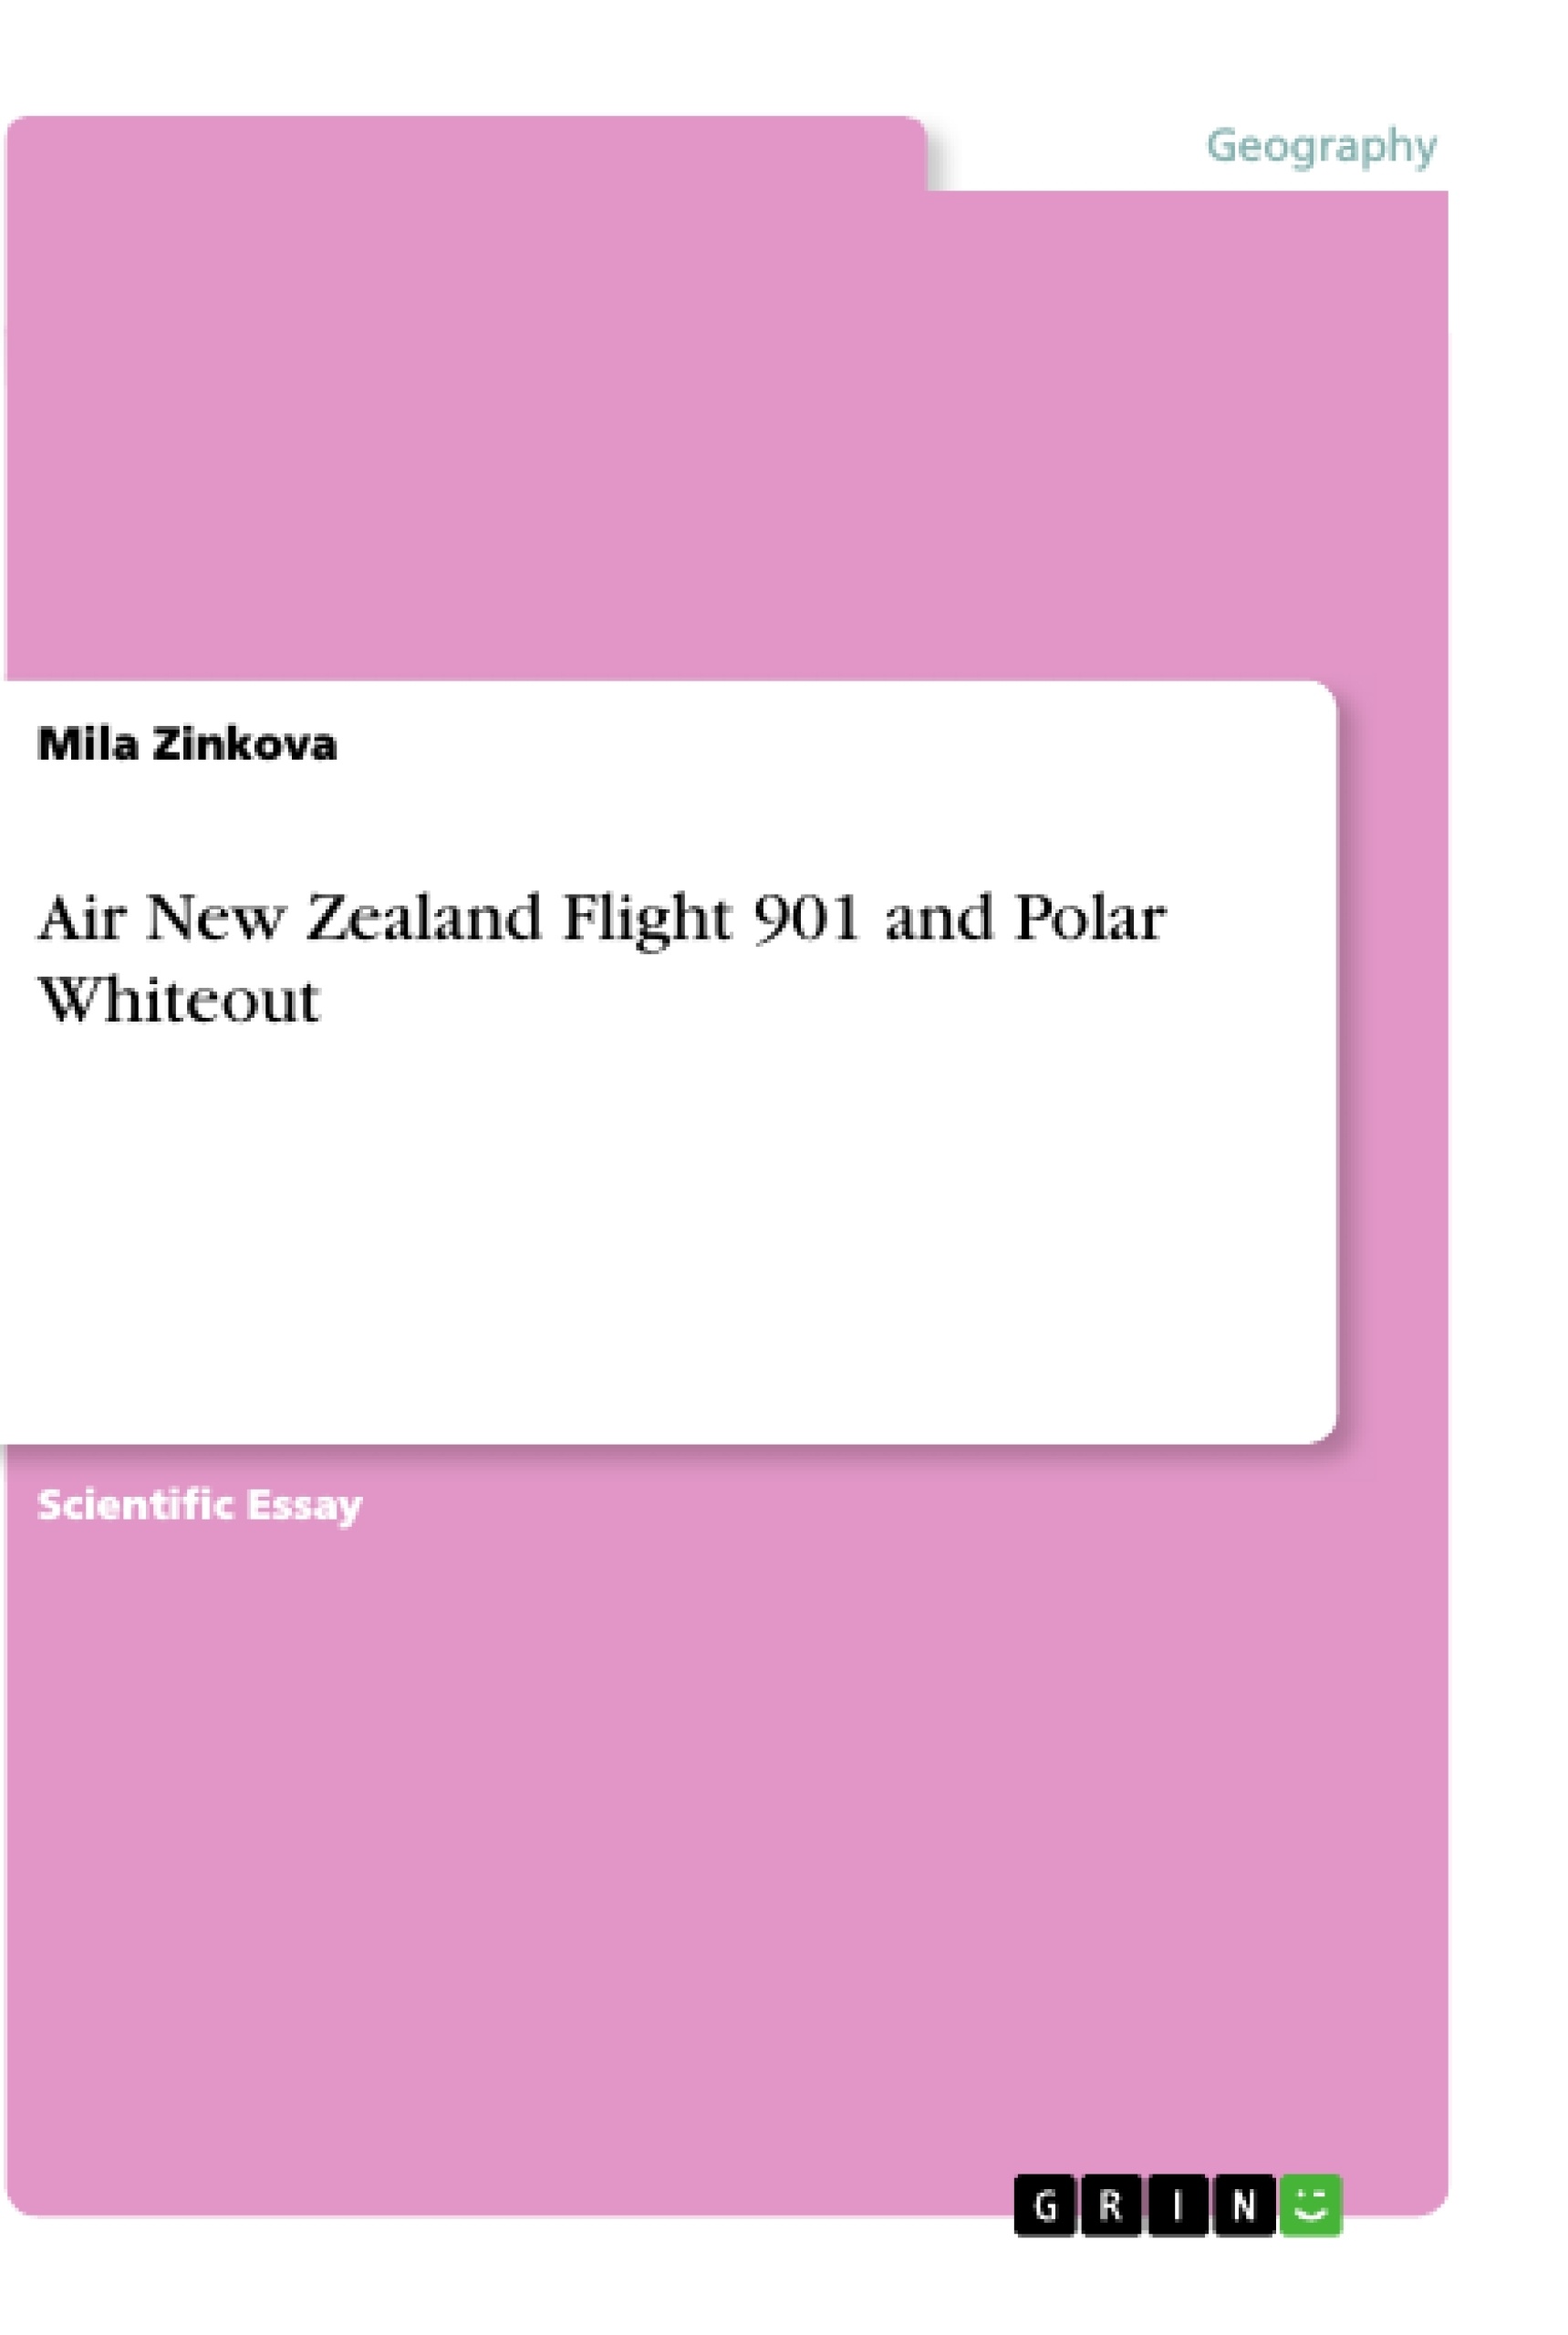 Titel: Air New Zealand Flight 901 and Polar Whiteout